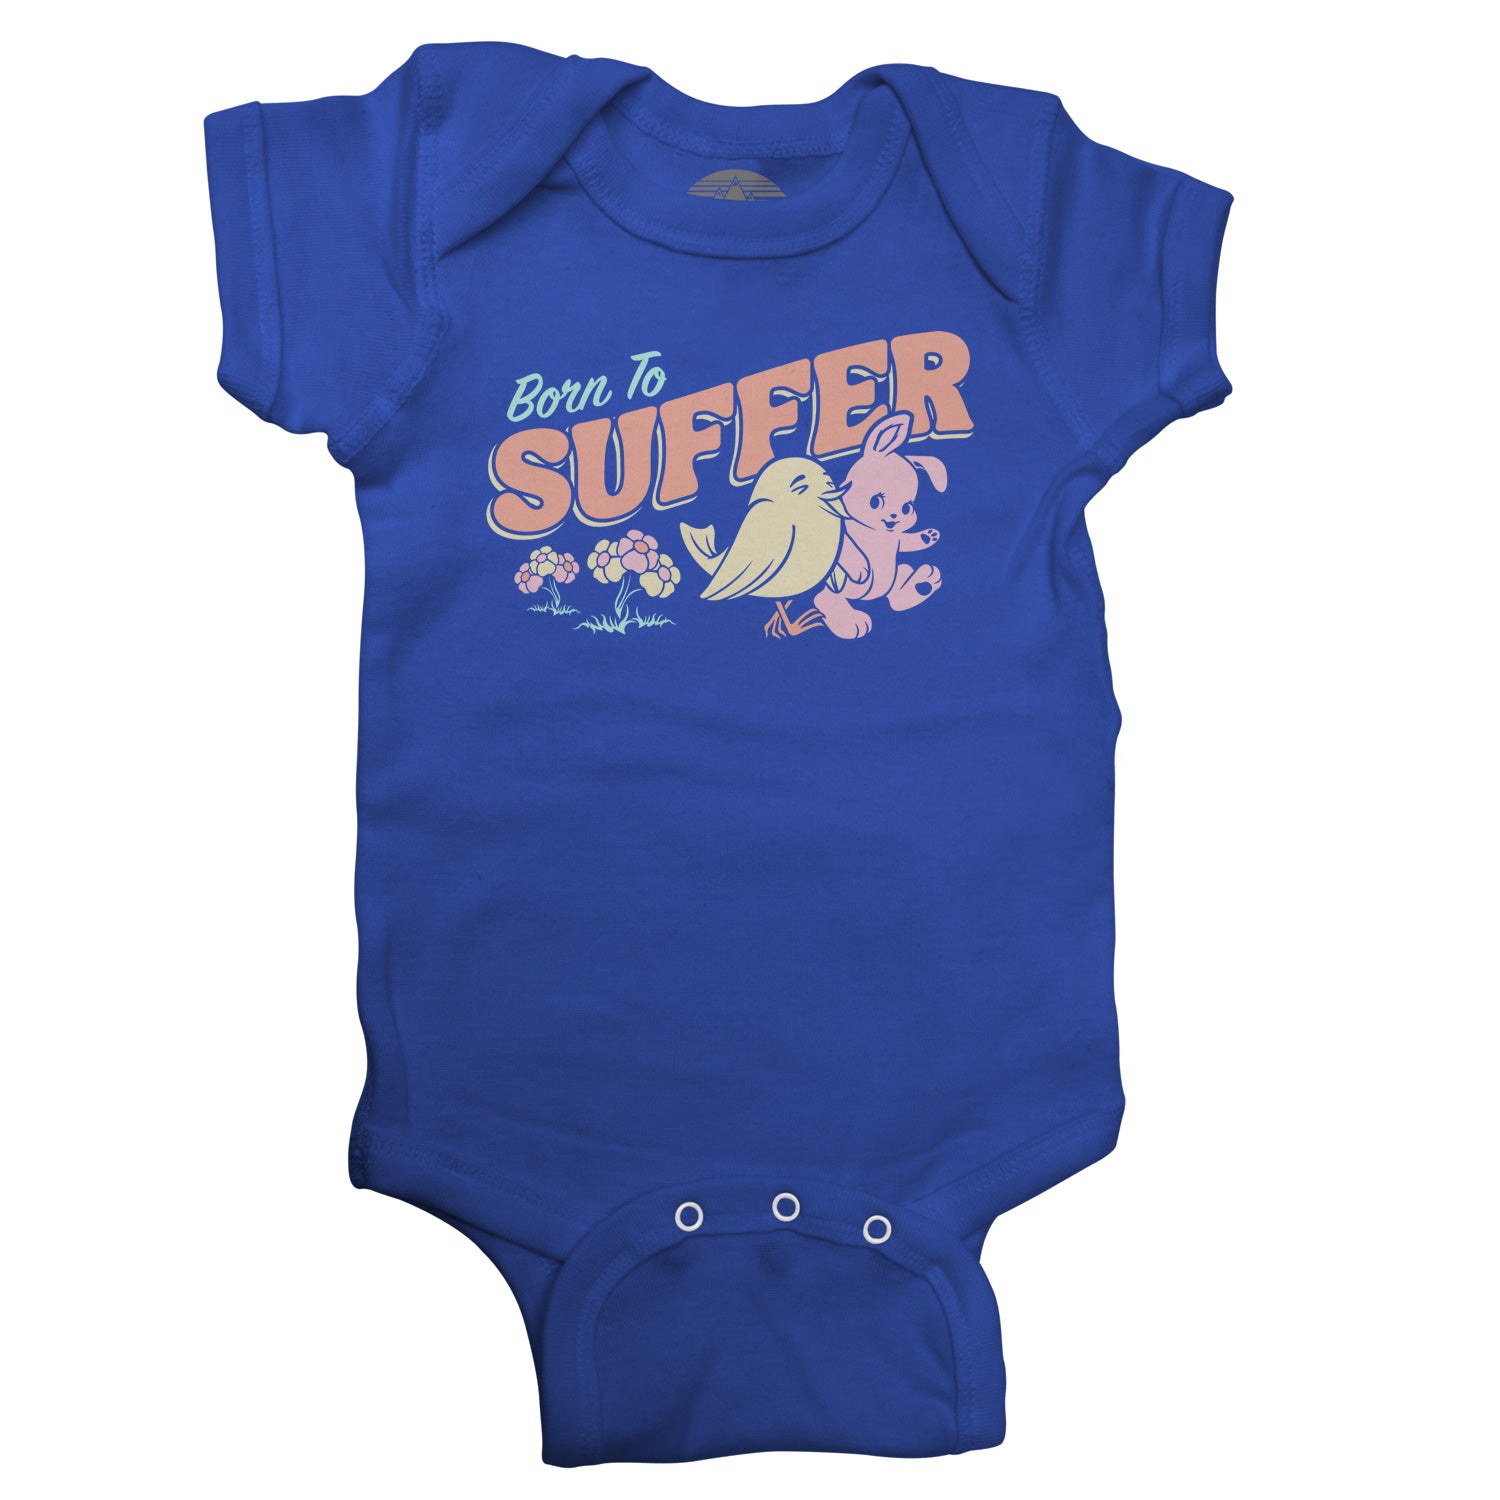 Born to Suffer Infant Bodysuit - Unisex Fit